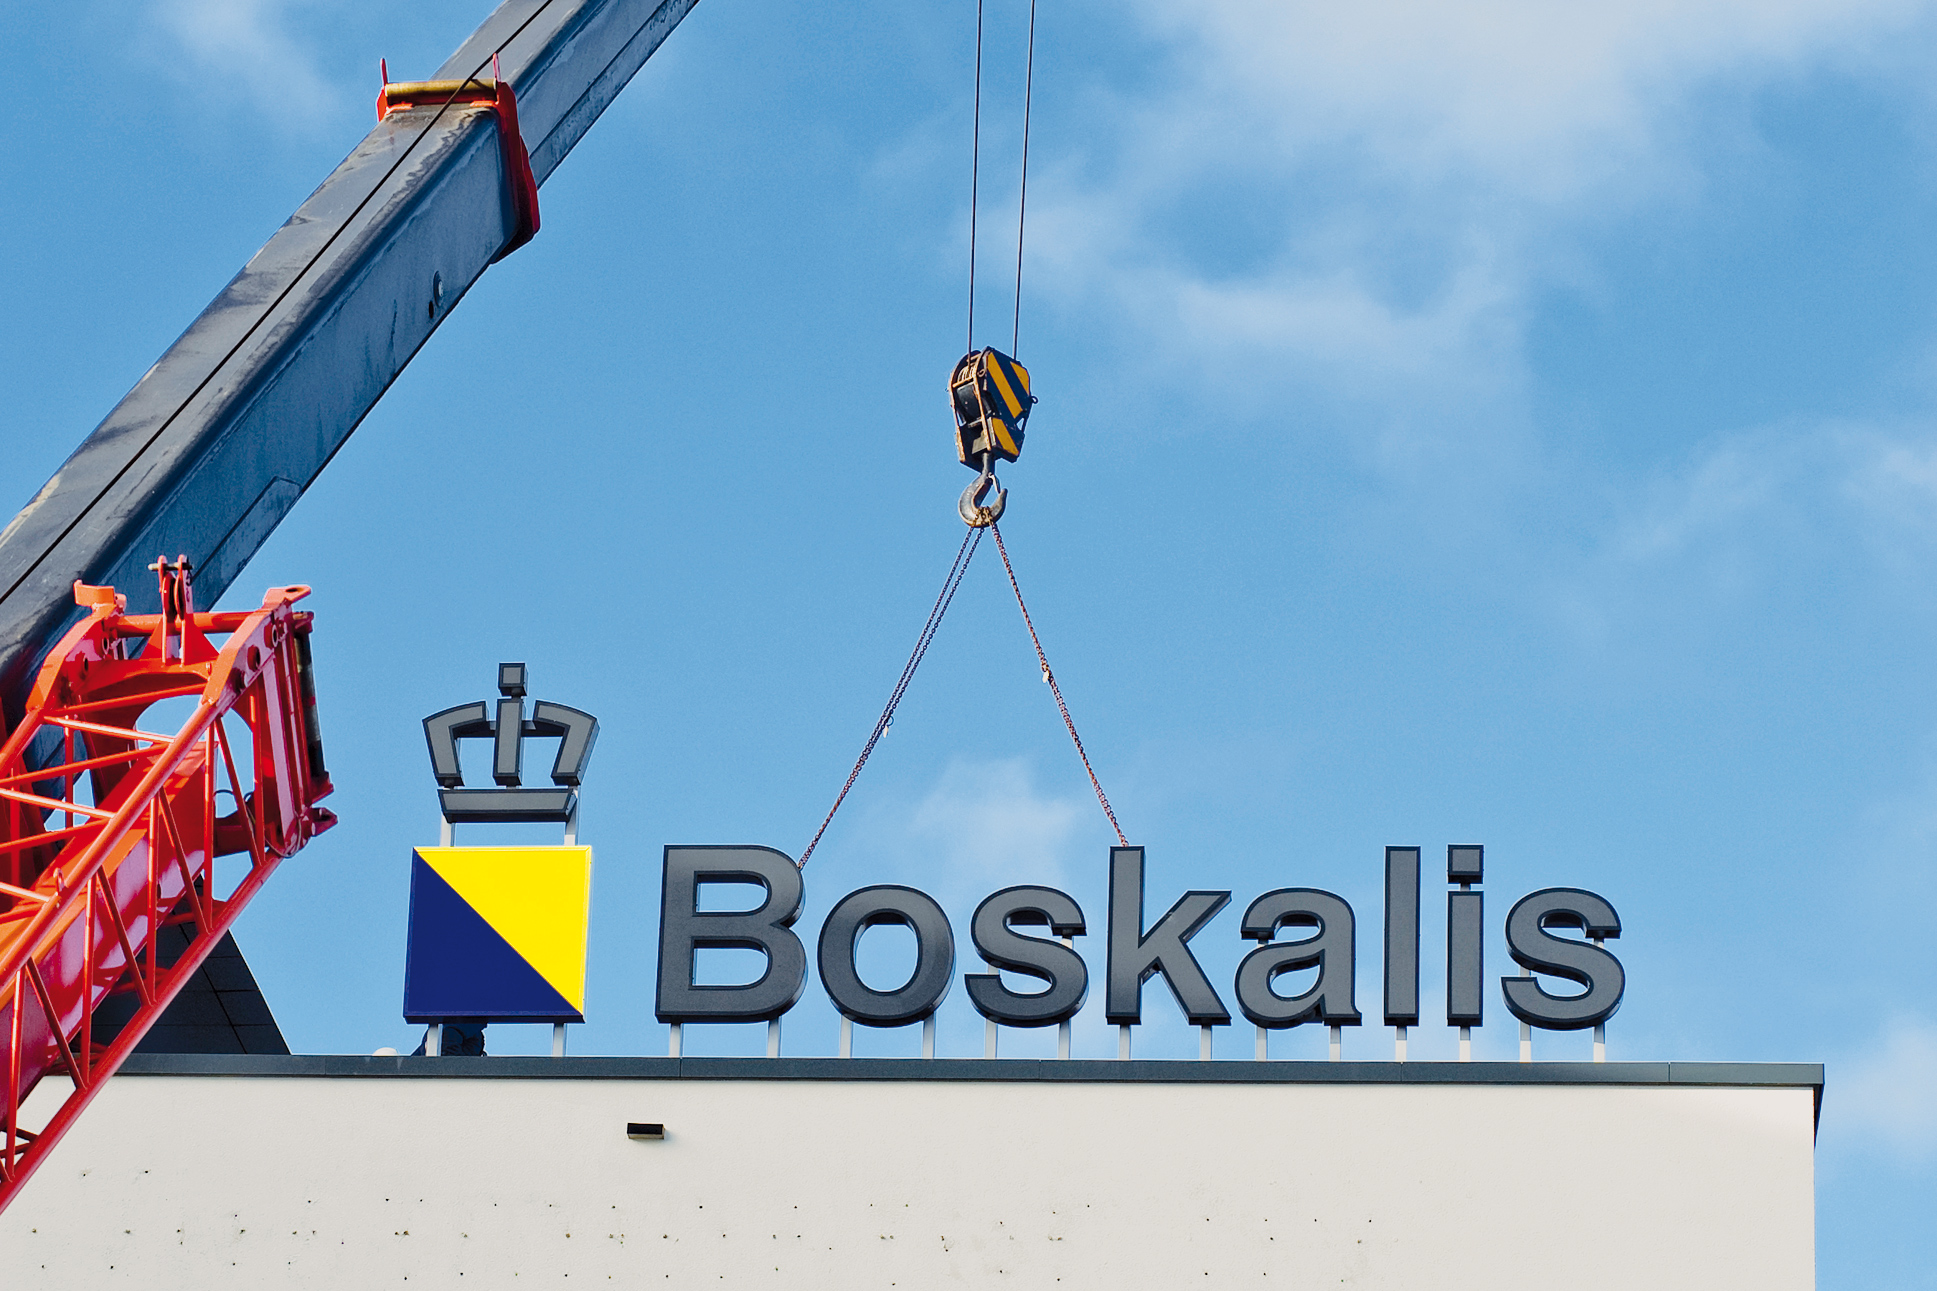 studio dumbar design visual brand identity for Boskalis the leading dredging and marine experts signage logo design